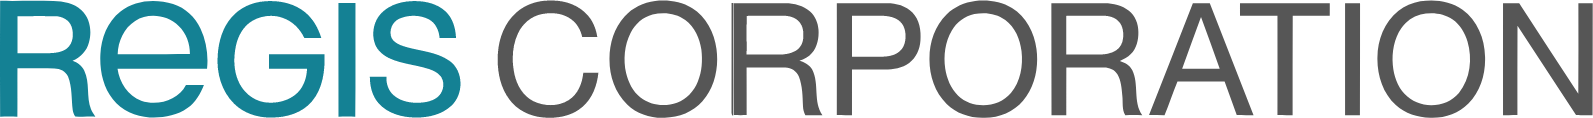 Regis Corporation
 logo large (transparent PNG)